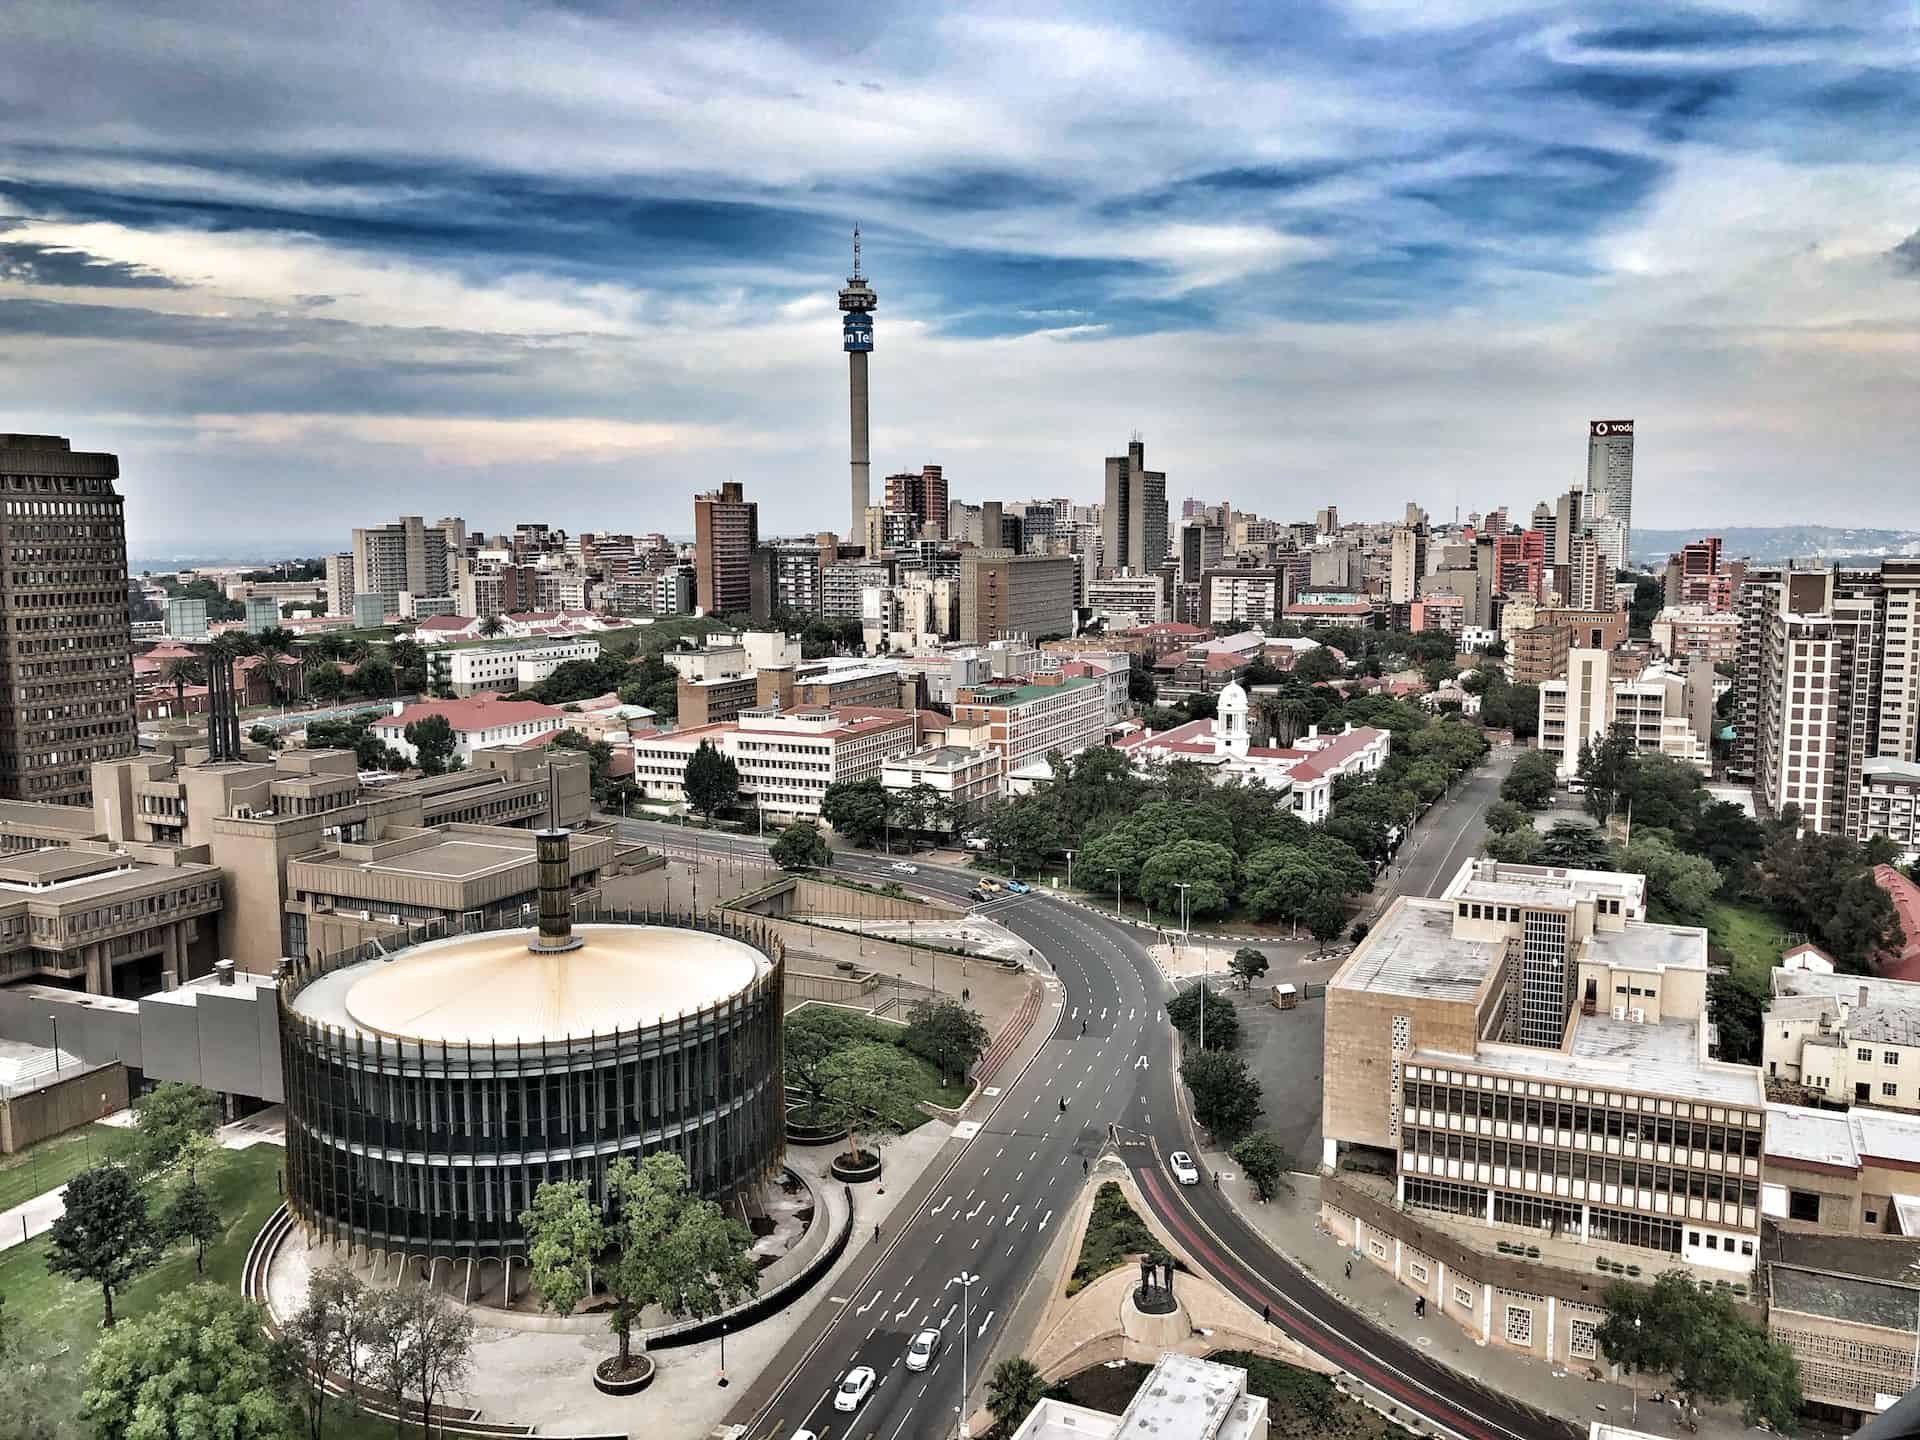 Best things to do in Johannesburg South Africa - Kenzeo Mpoyi - Johannesburg skyline by Clodagh Da Paixao on Unsplash